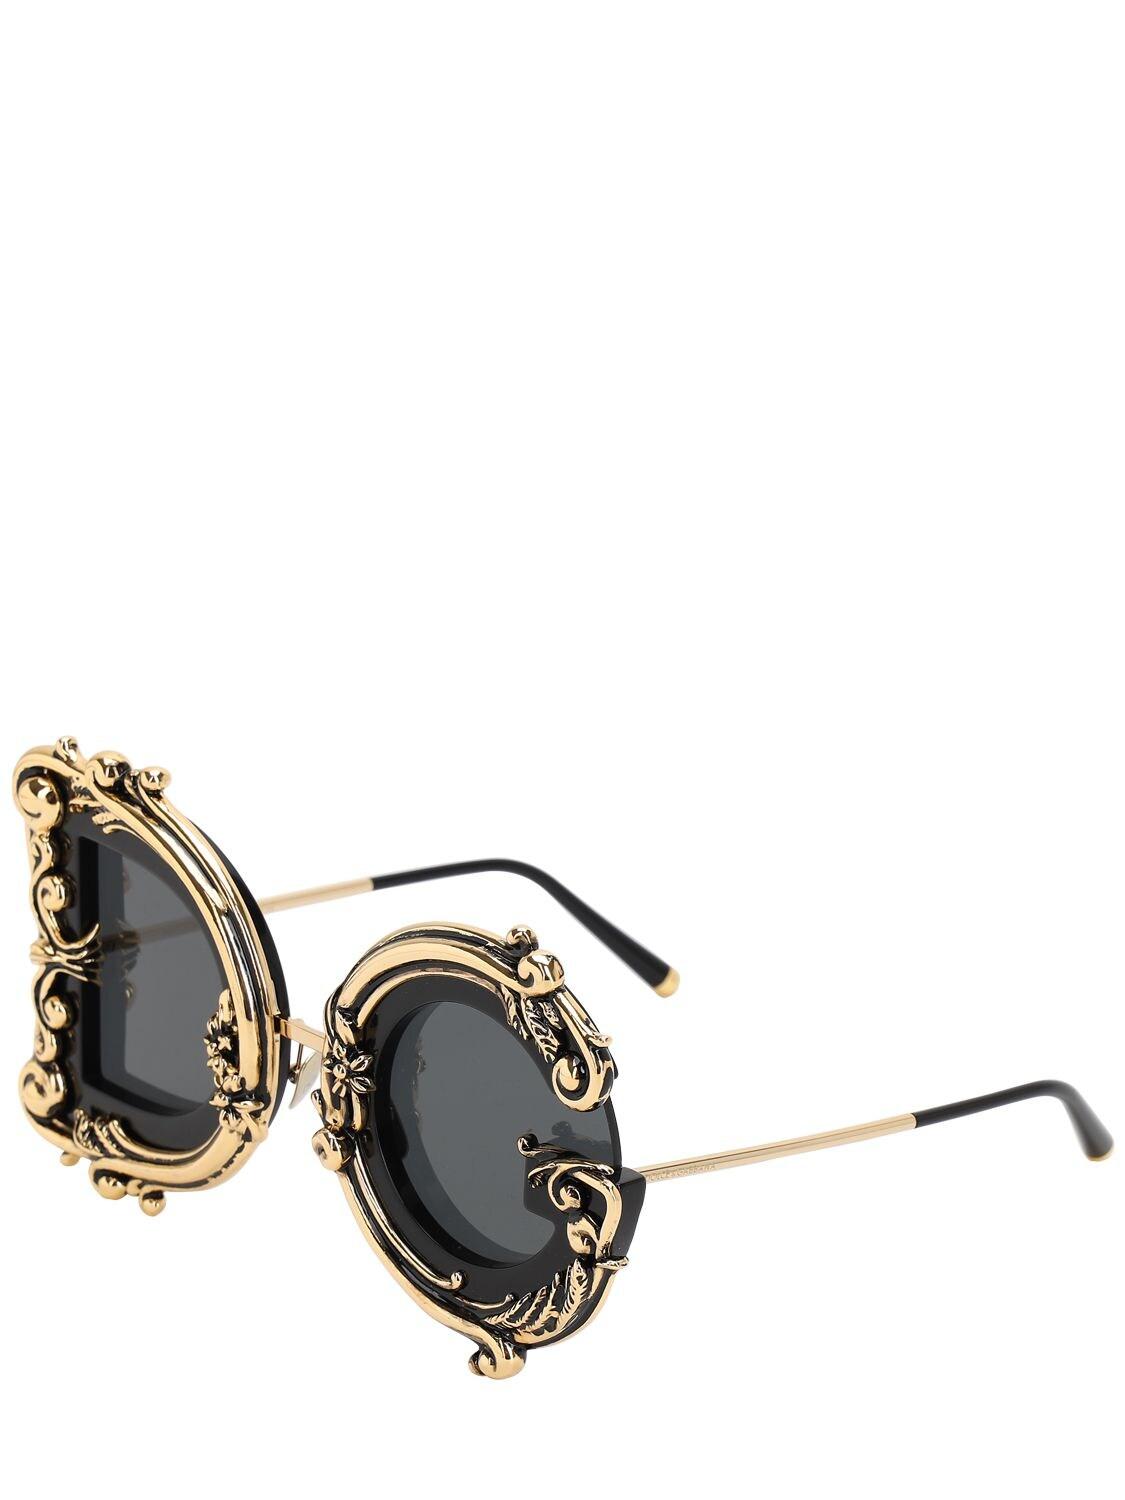 Dolce & Gabbana Devotion Sunglasses | Lyst